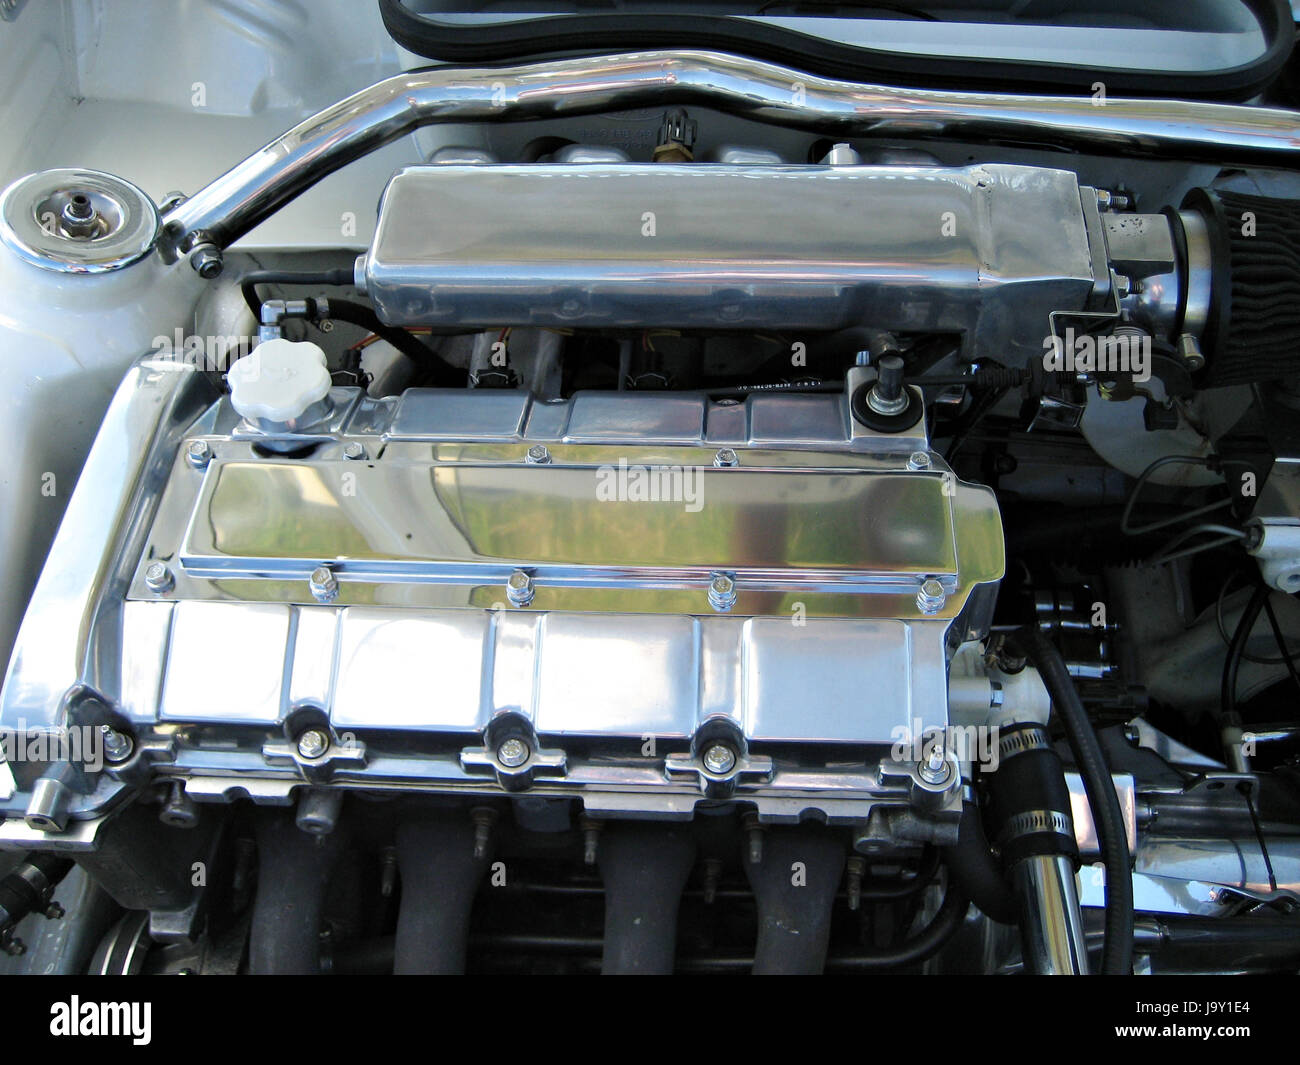 engine of turbo rs tuningcar Stock Photo